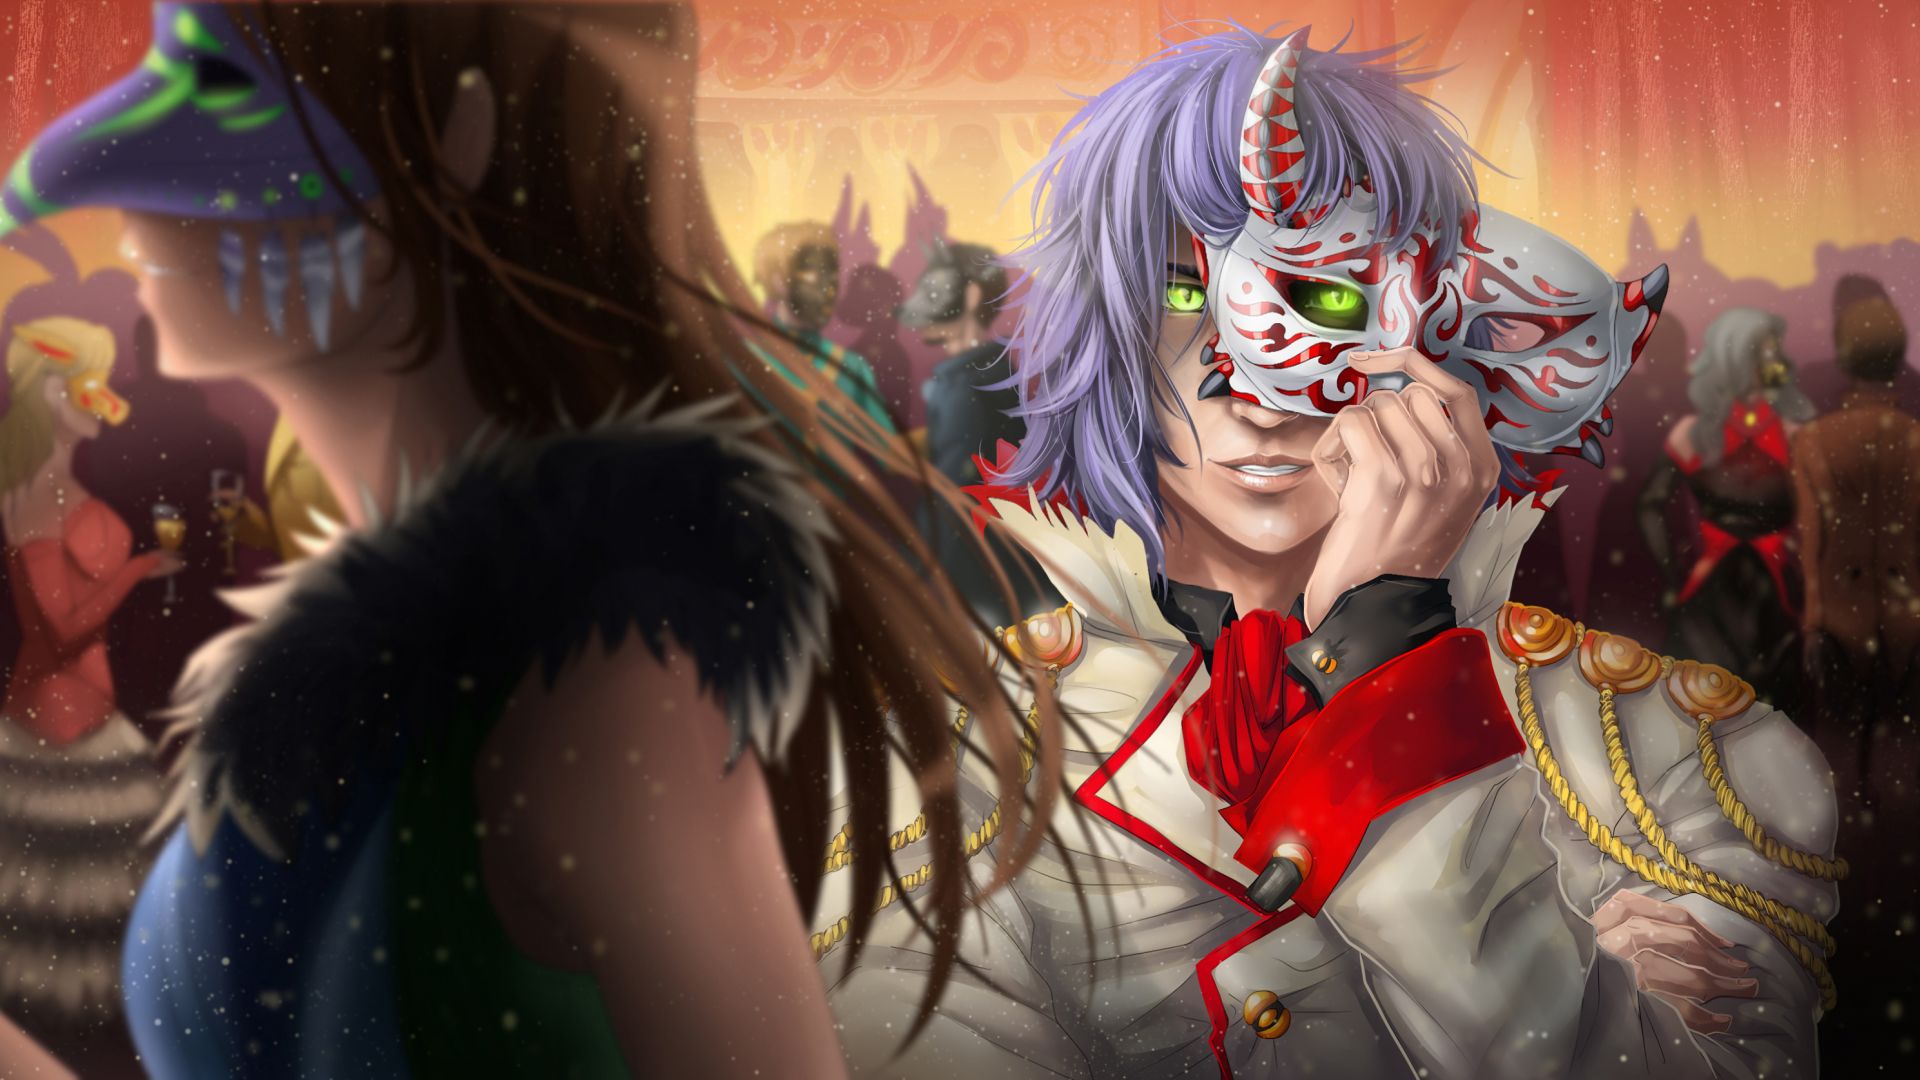 Wallpaper Carnival, anime boy